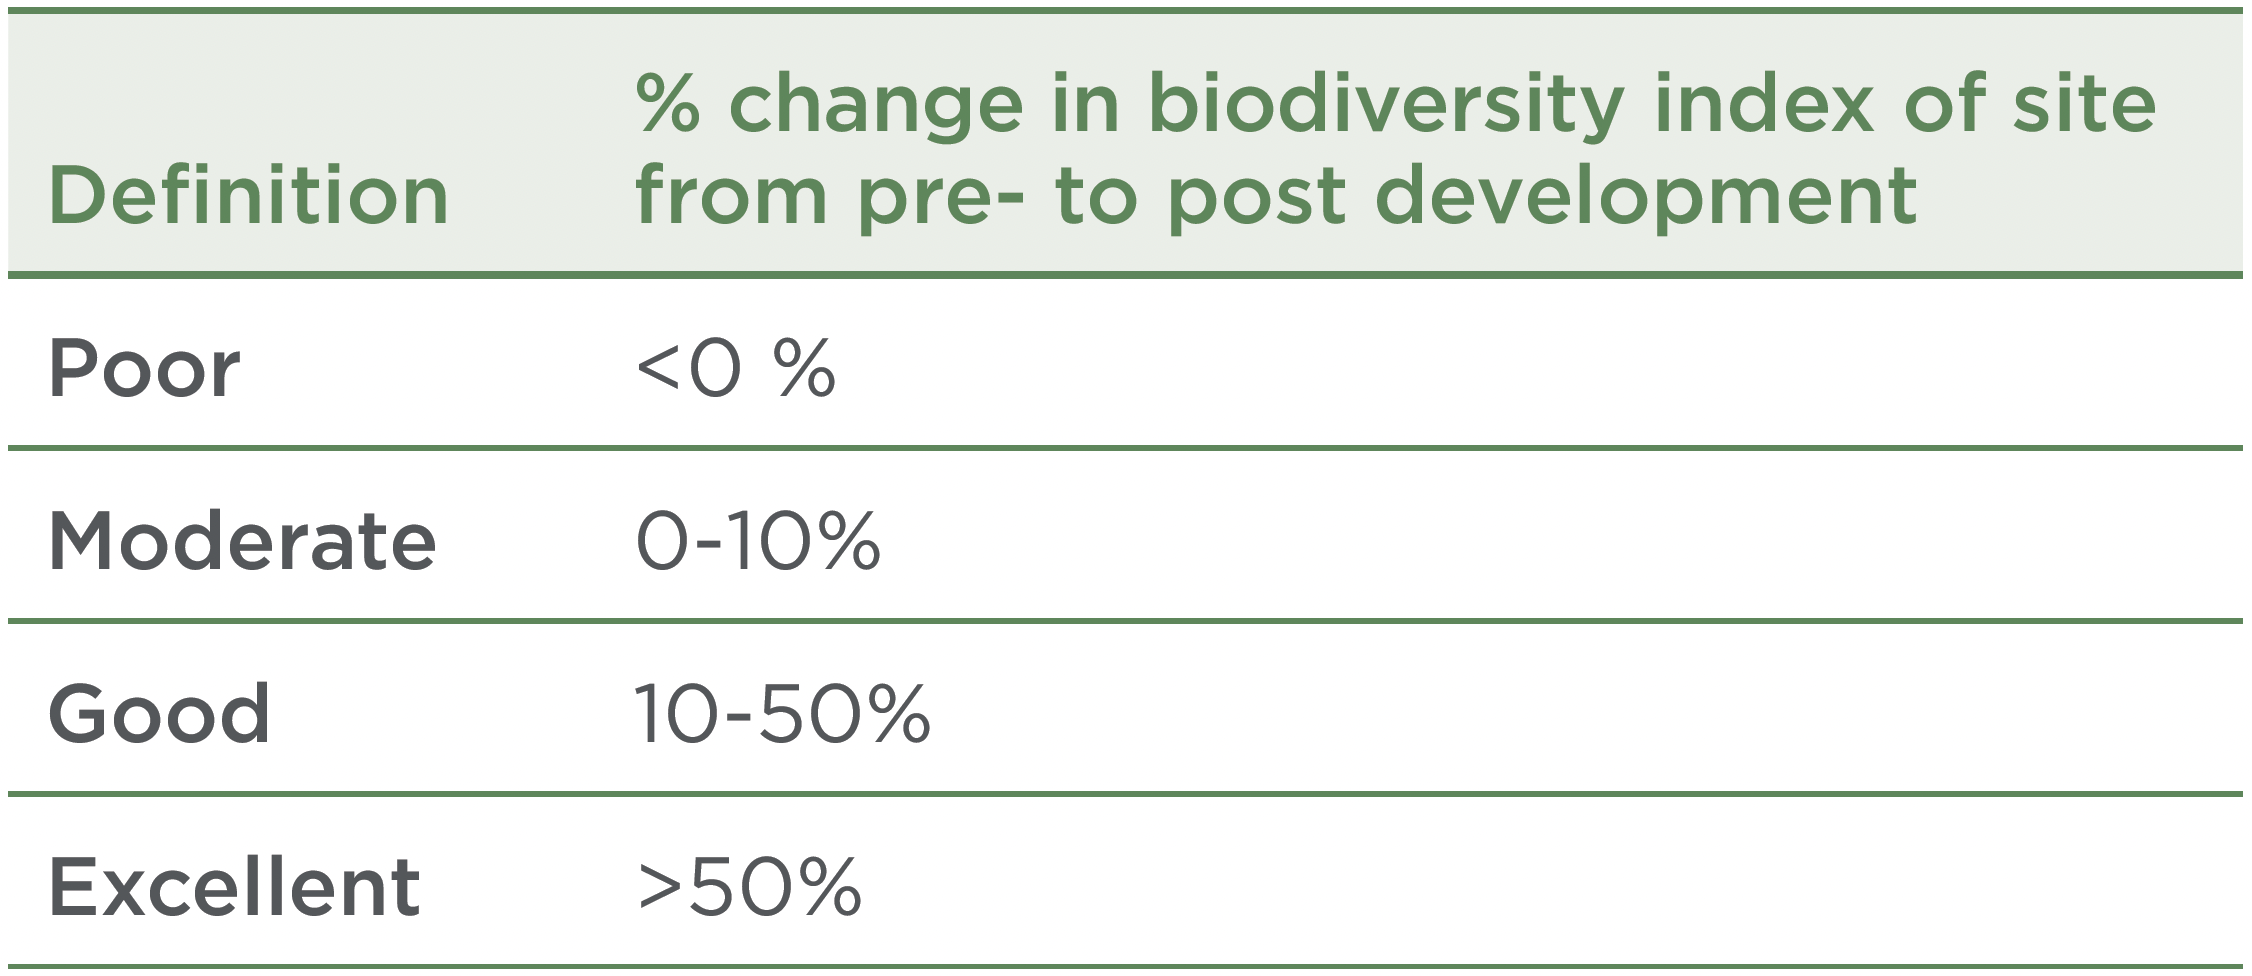 Change in biodiversity